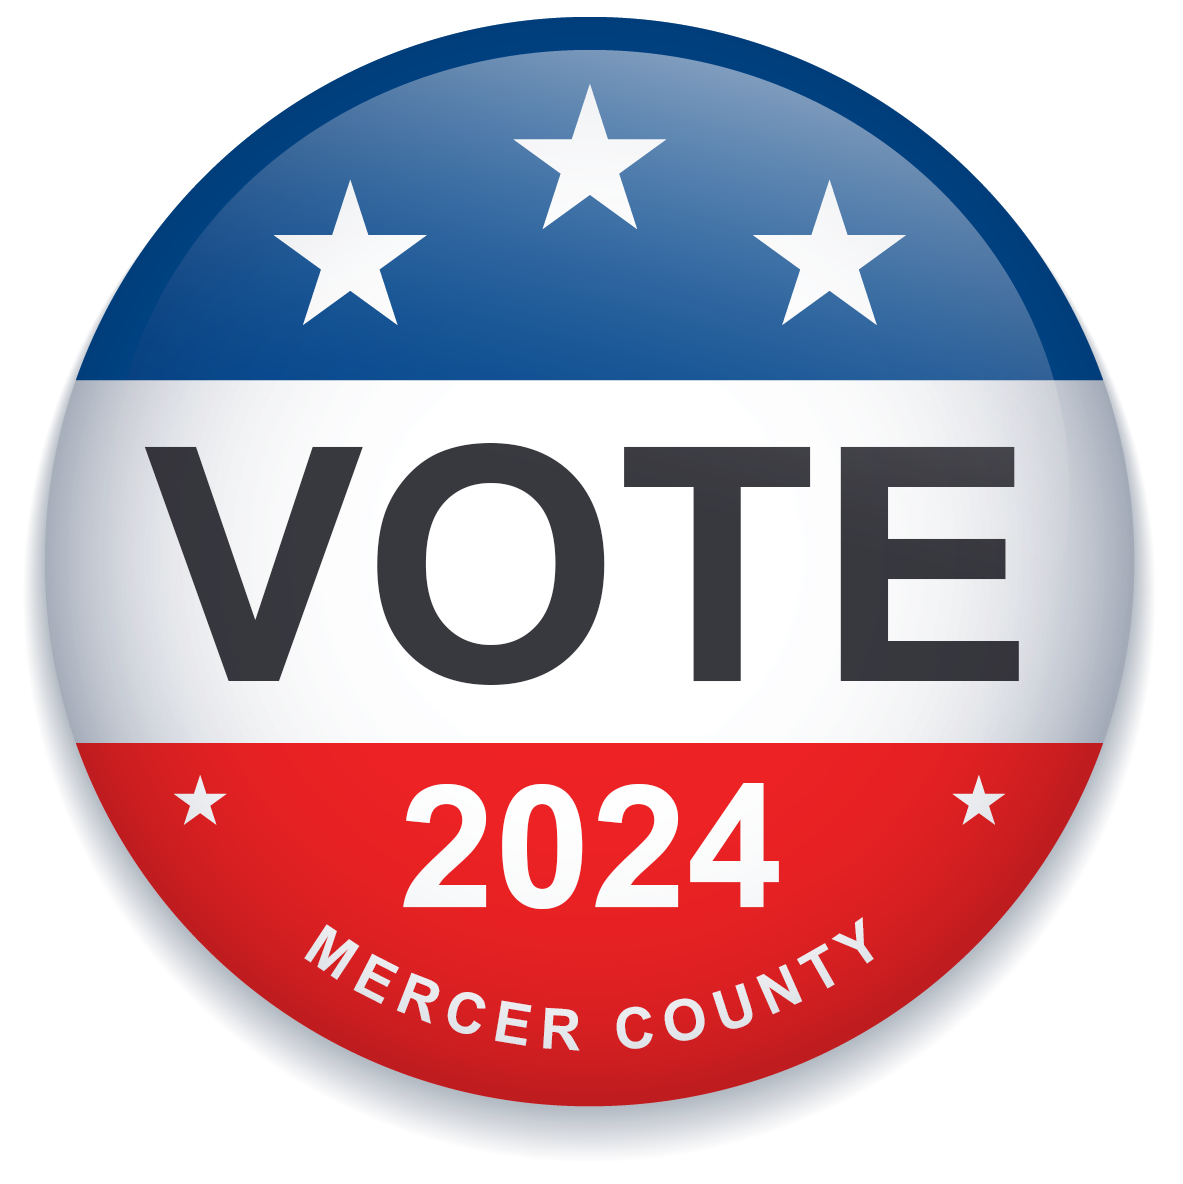 Vote Mercer County logo